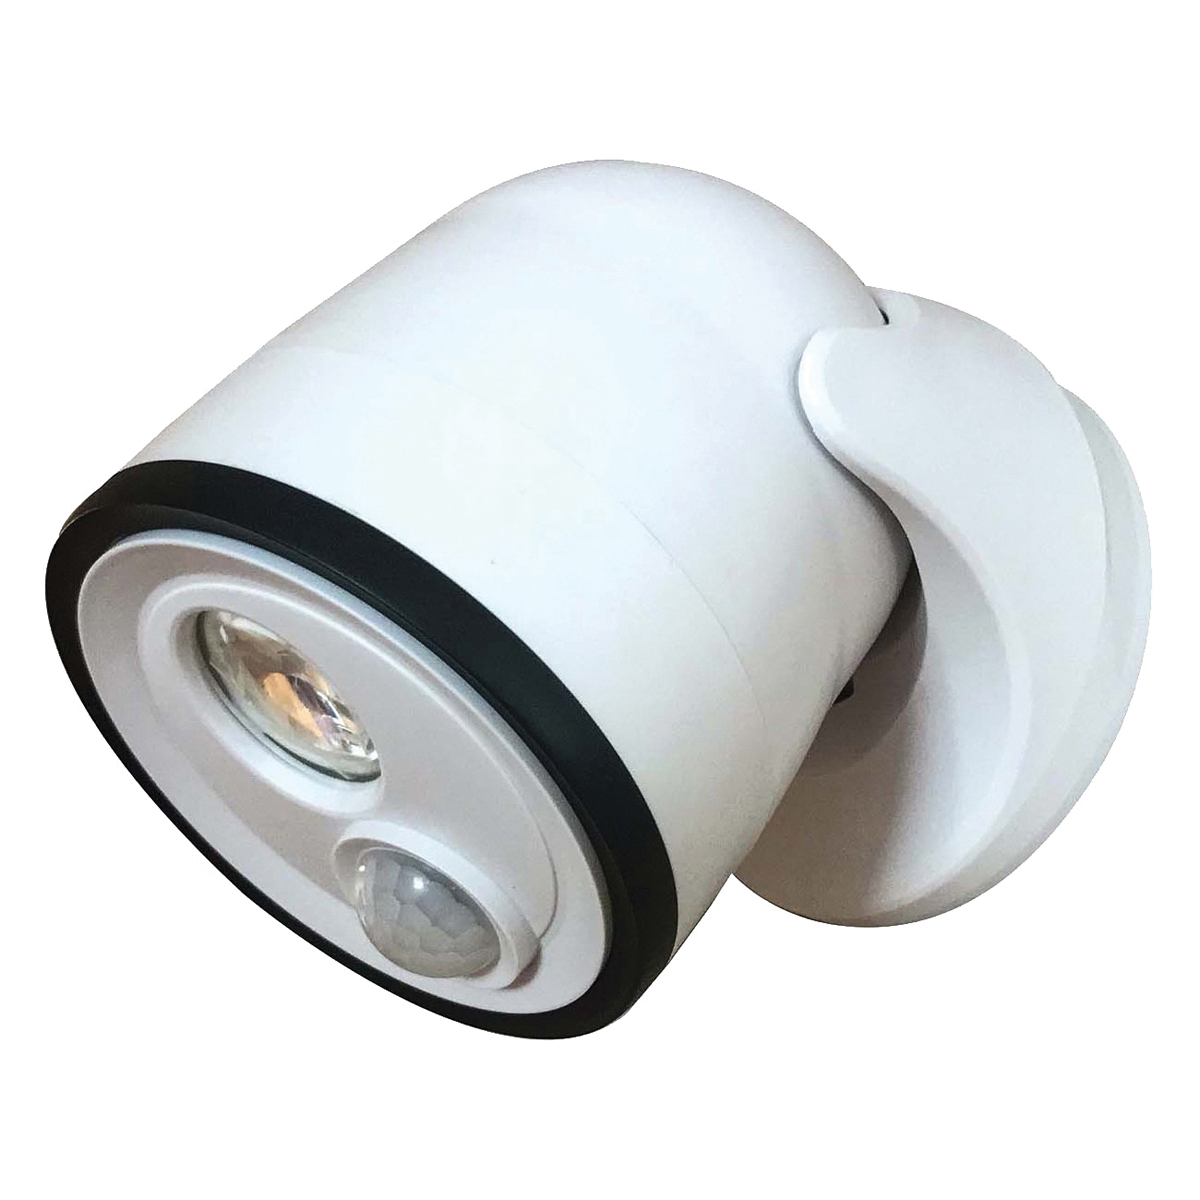 33001-108 Security Light, LED Lamp, 400 Lumens, White Fixture